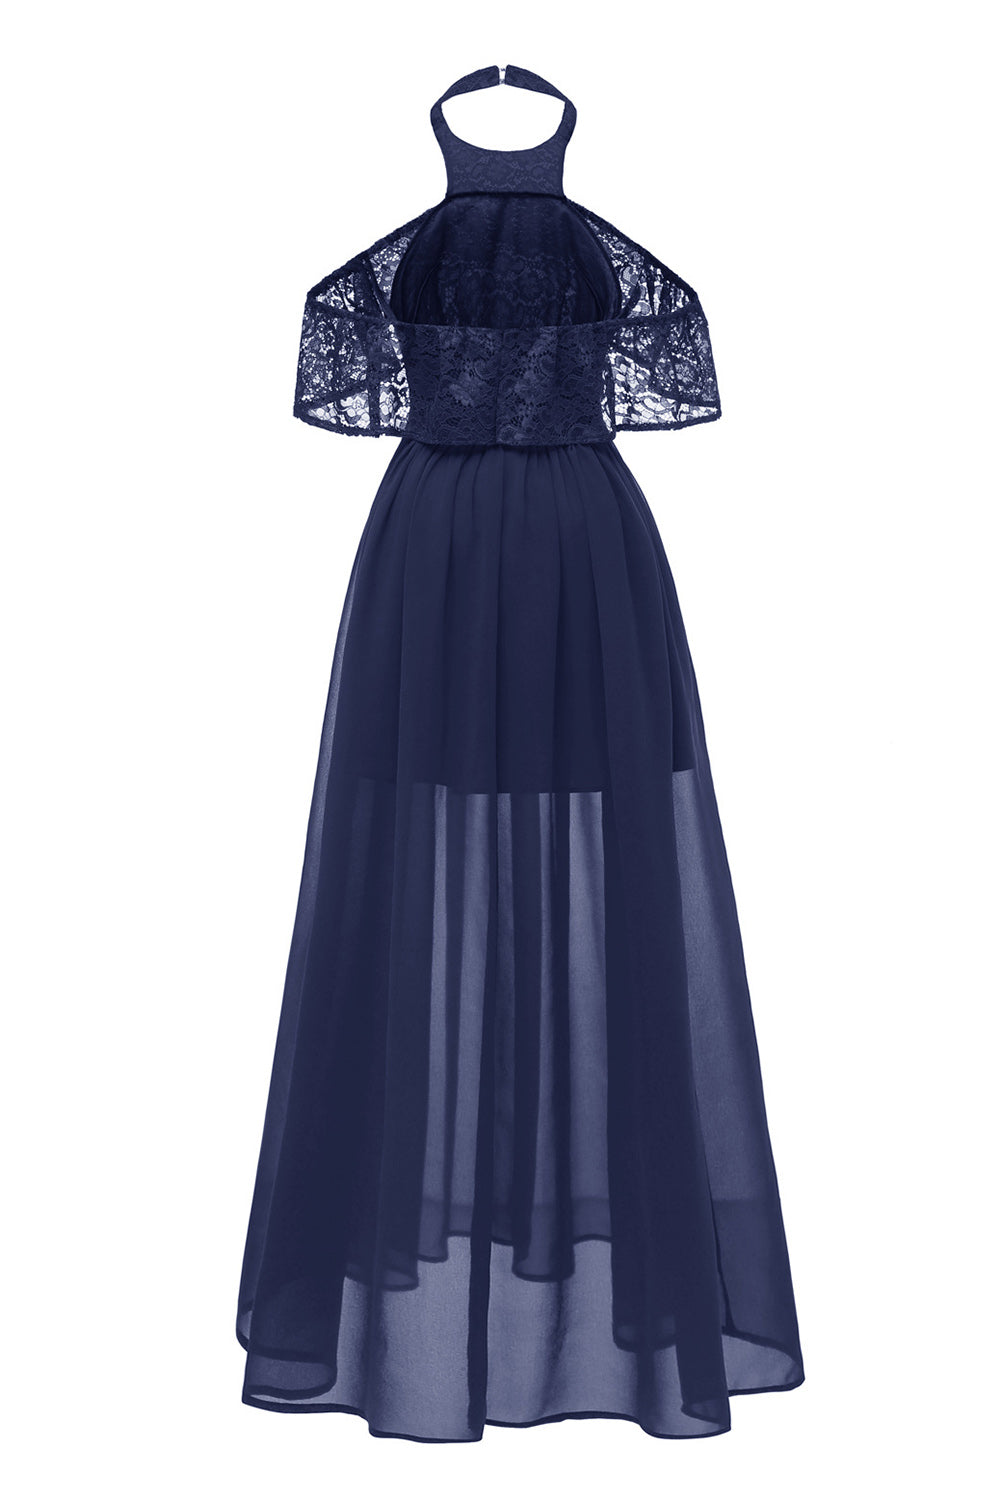 Burgundy Halter Tulle Vintage Dress With Lace